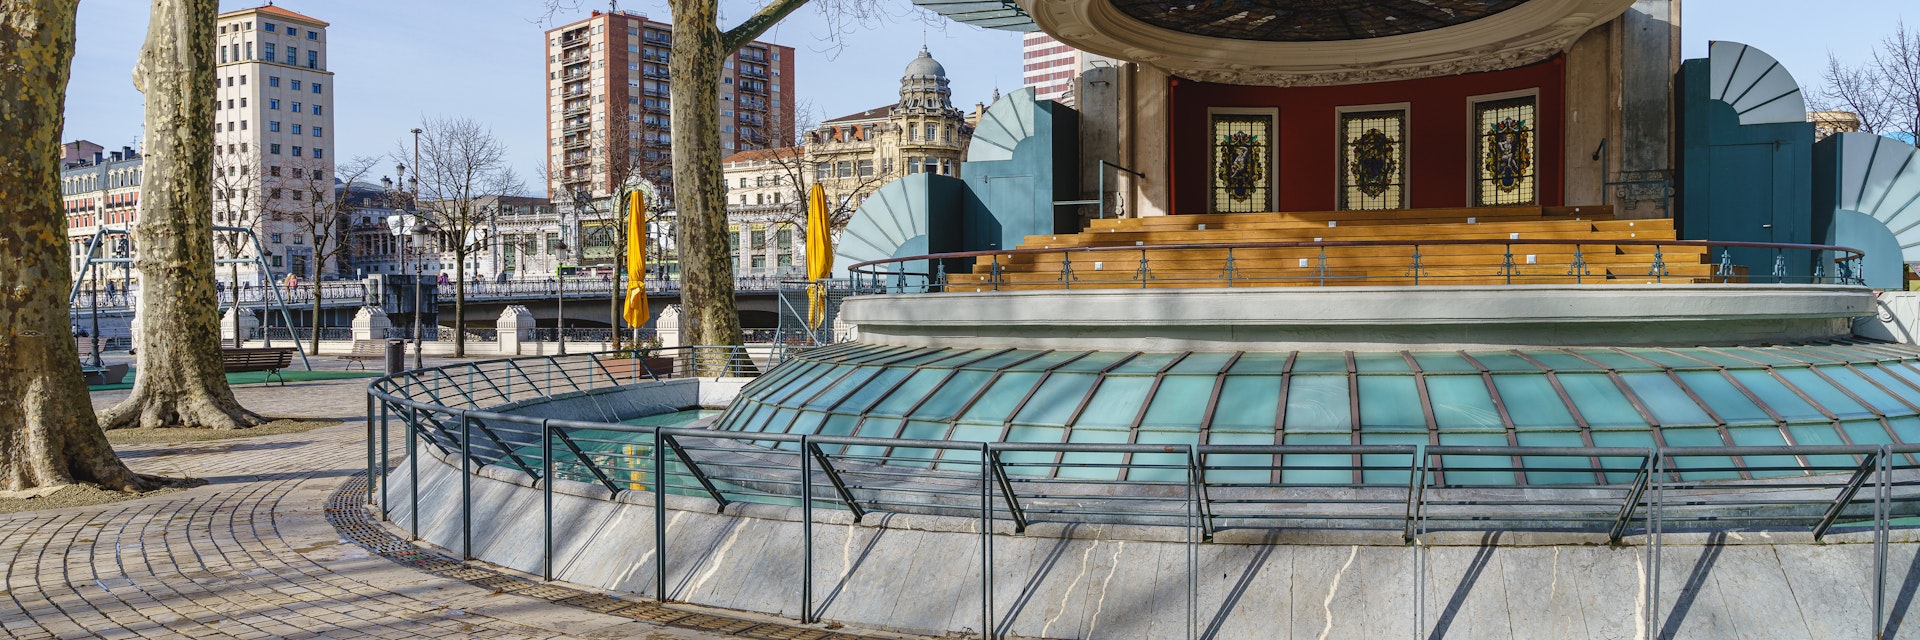 Spain, Bilbao, circular bandstand by the architect of Bermeo Pedro Ispizua in Plaza del Arenal.